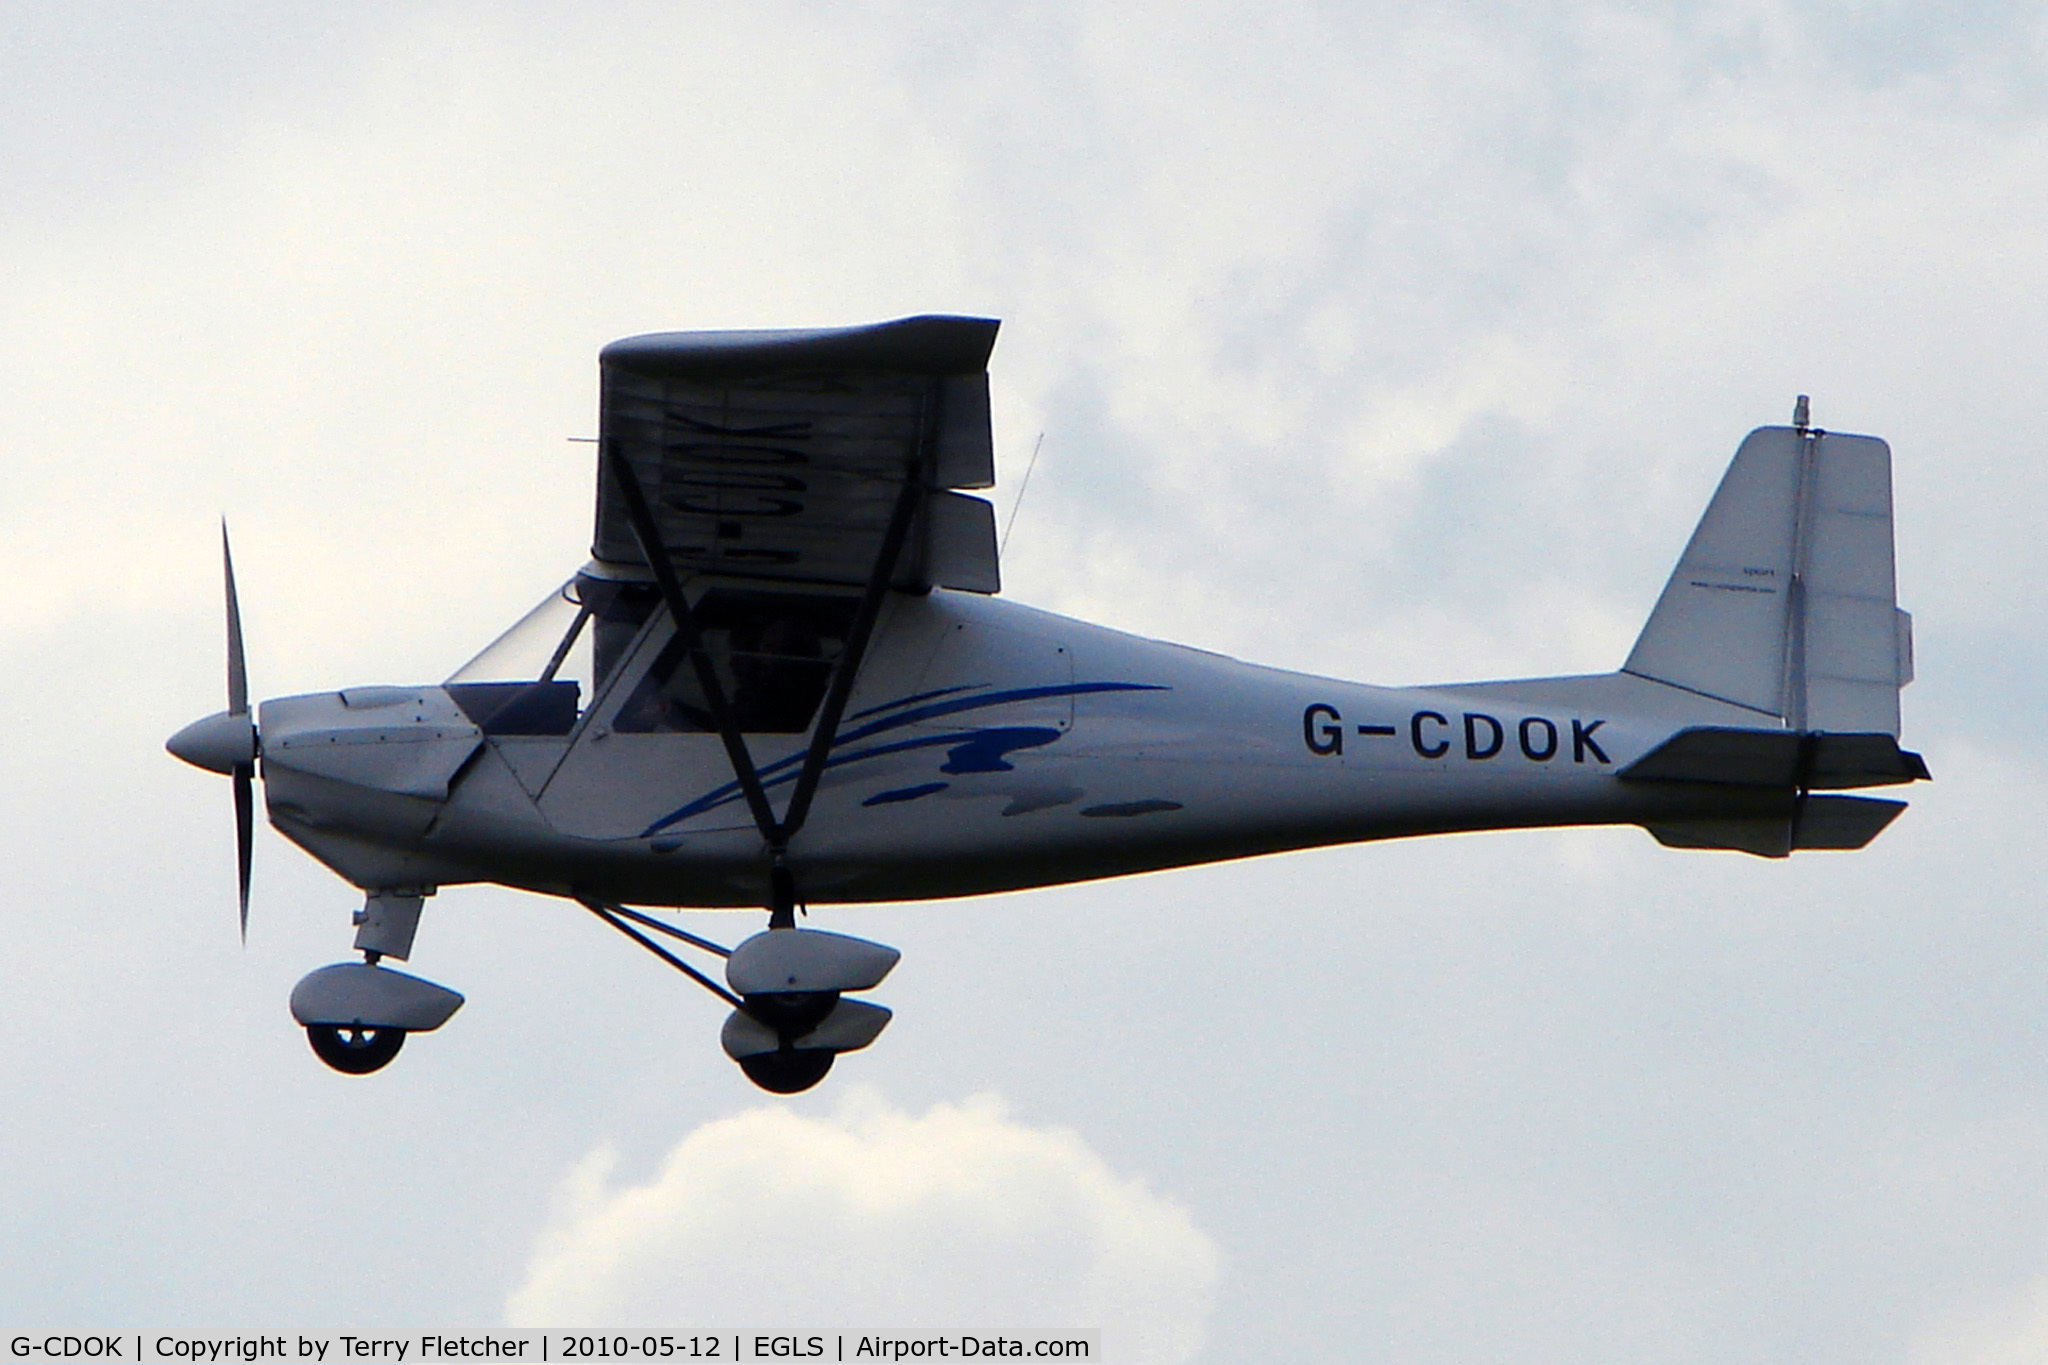 G-CDOK, 2005 Comco Ikarus C42 FB100 C/N 0509-6757, 2005 Aerosport Ltd IKARUS C42 FB100 at Old Sarum Airfield